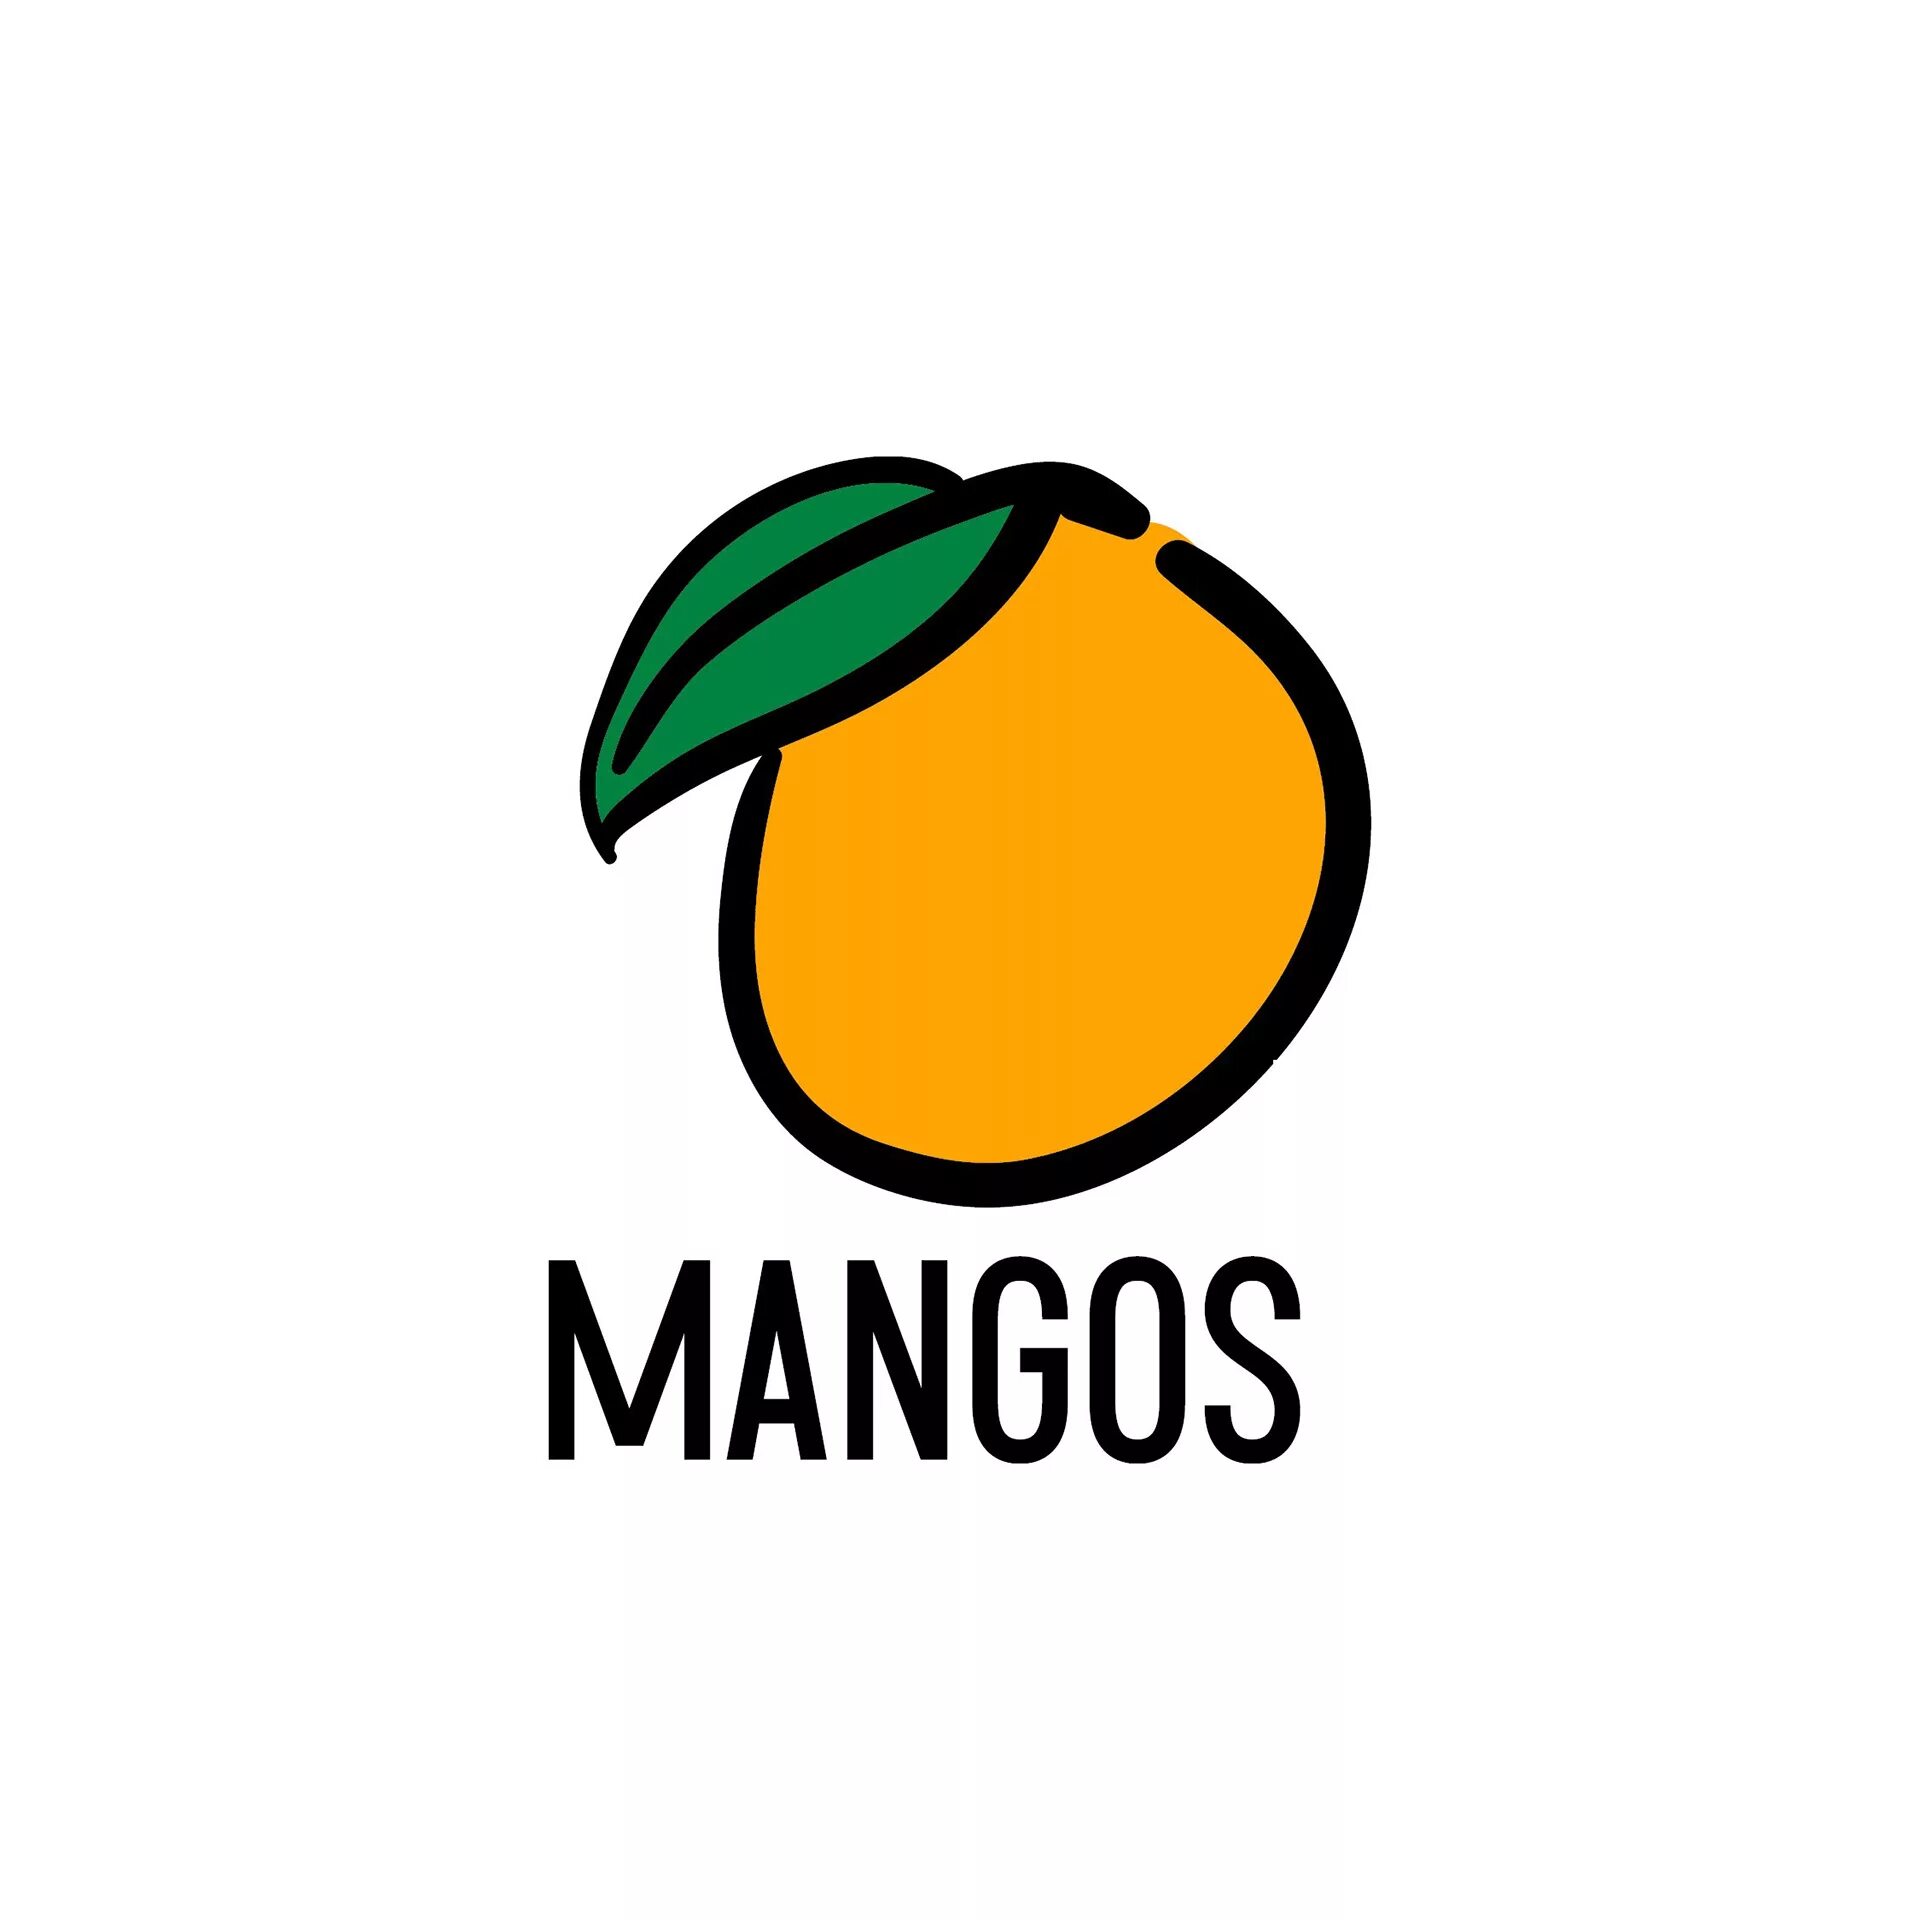 Манга логотип. Манго лого. Манго надпись. Манго магазин лого.